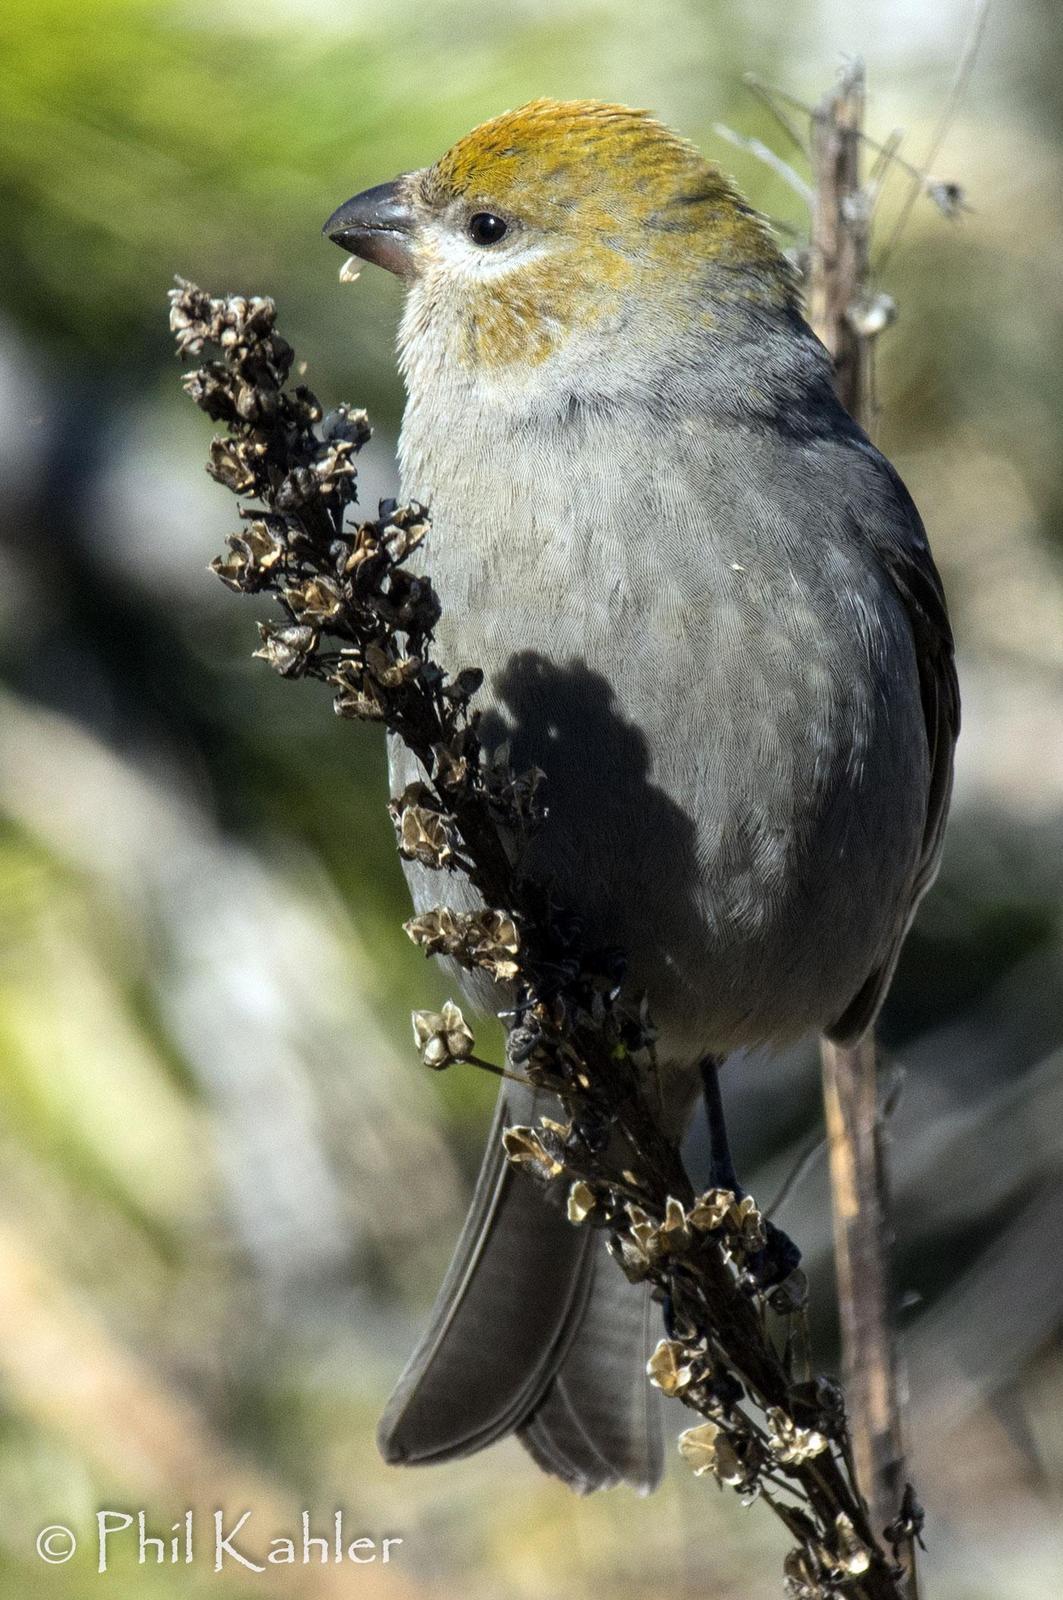 Pine Grosbeak Photo by Phil Kahler